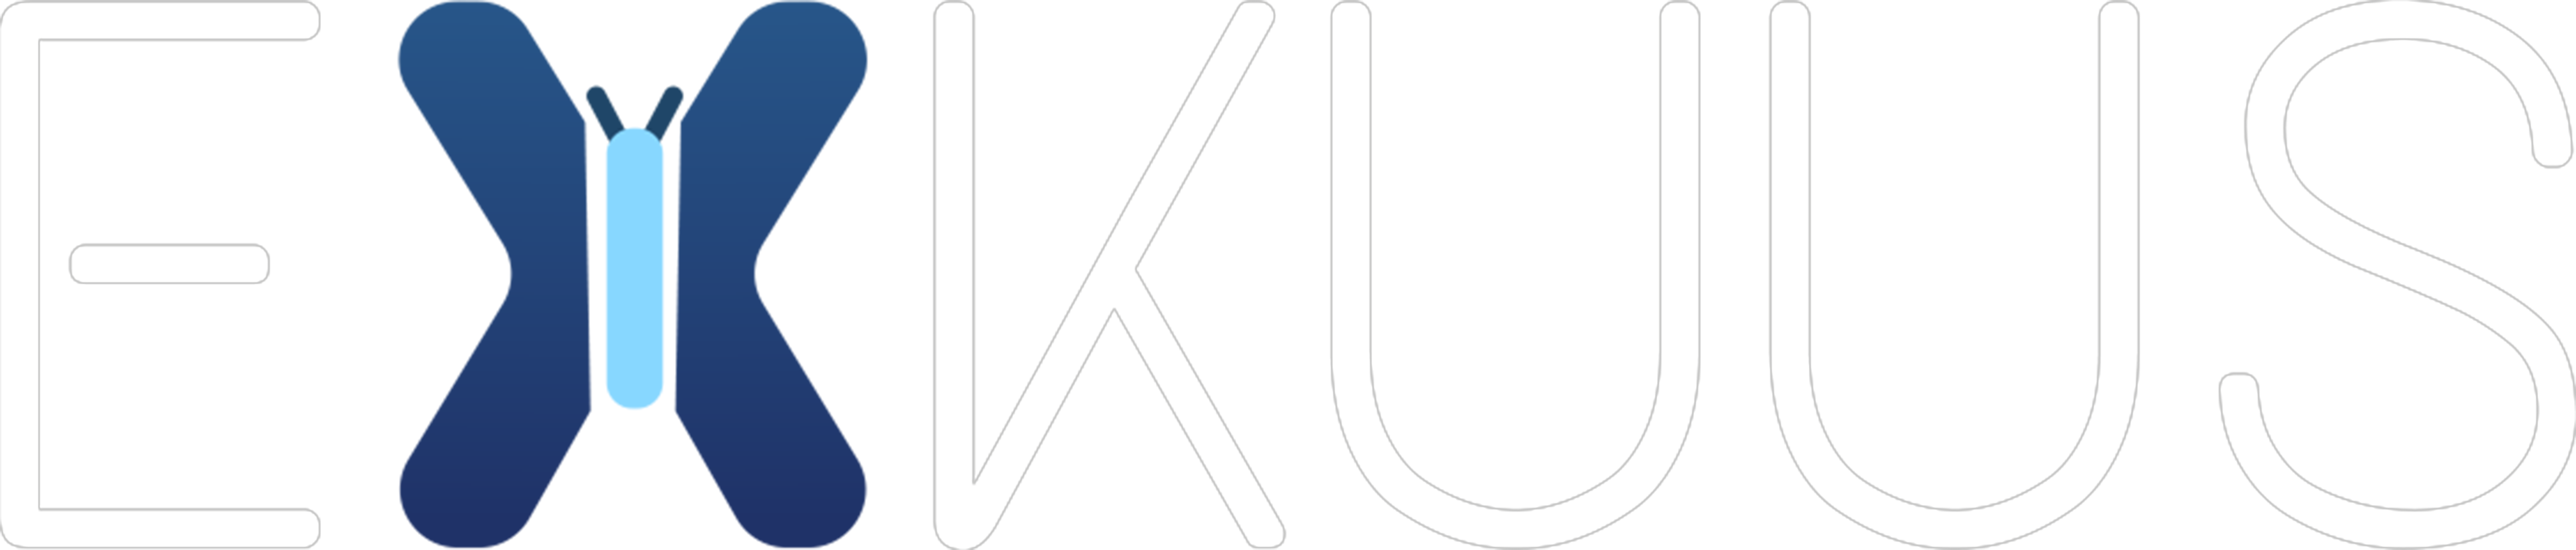 EXKUUS Logo